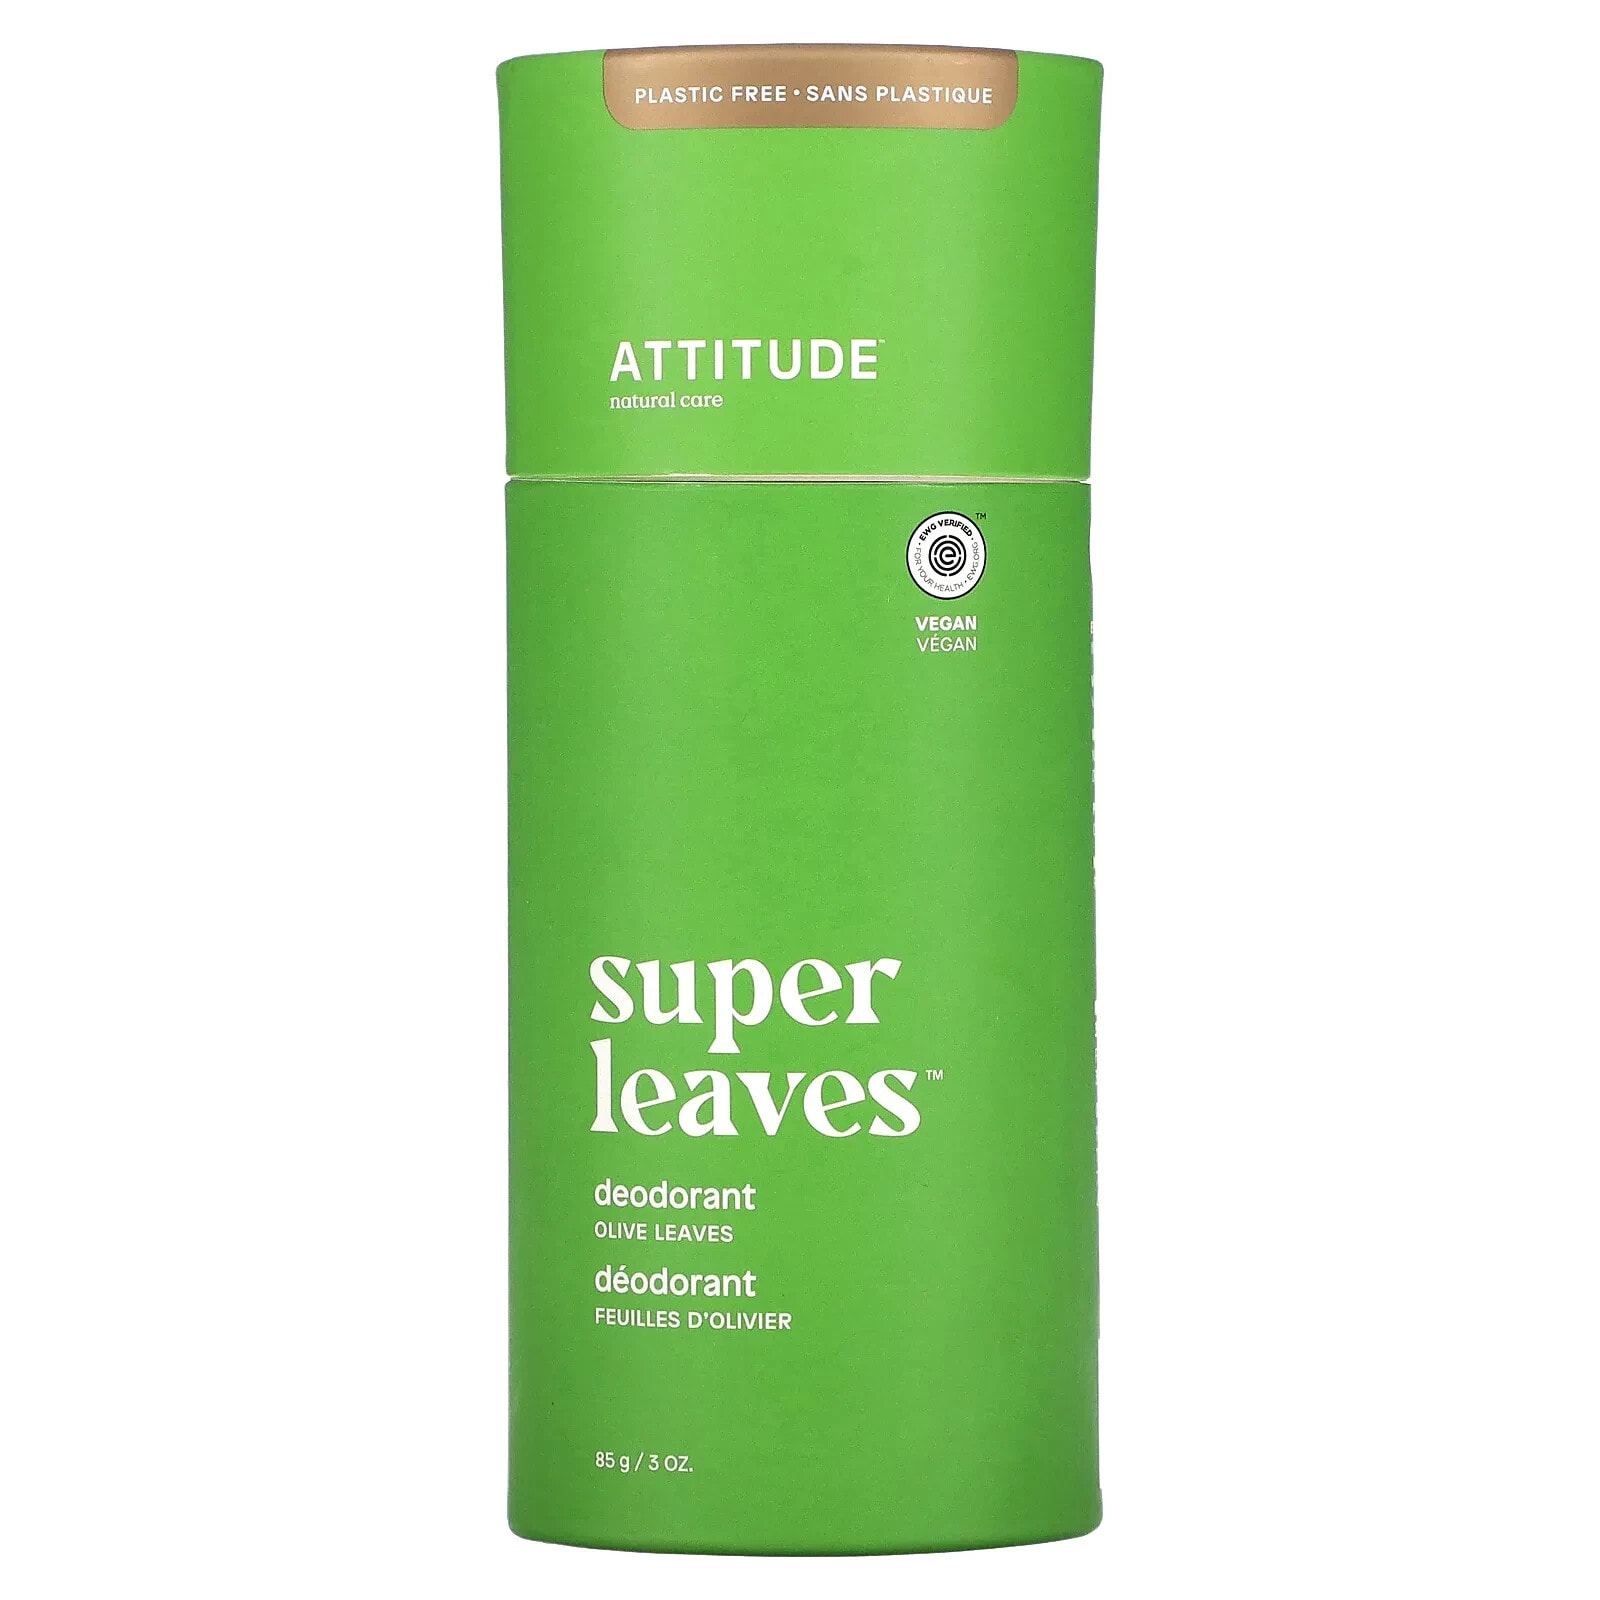 Super Leaves Deodorant, White Tea Leaves, 3 oz (85 g)